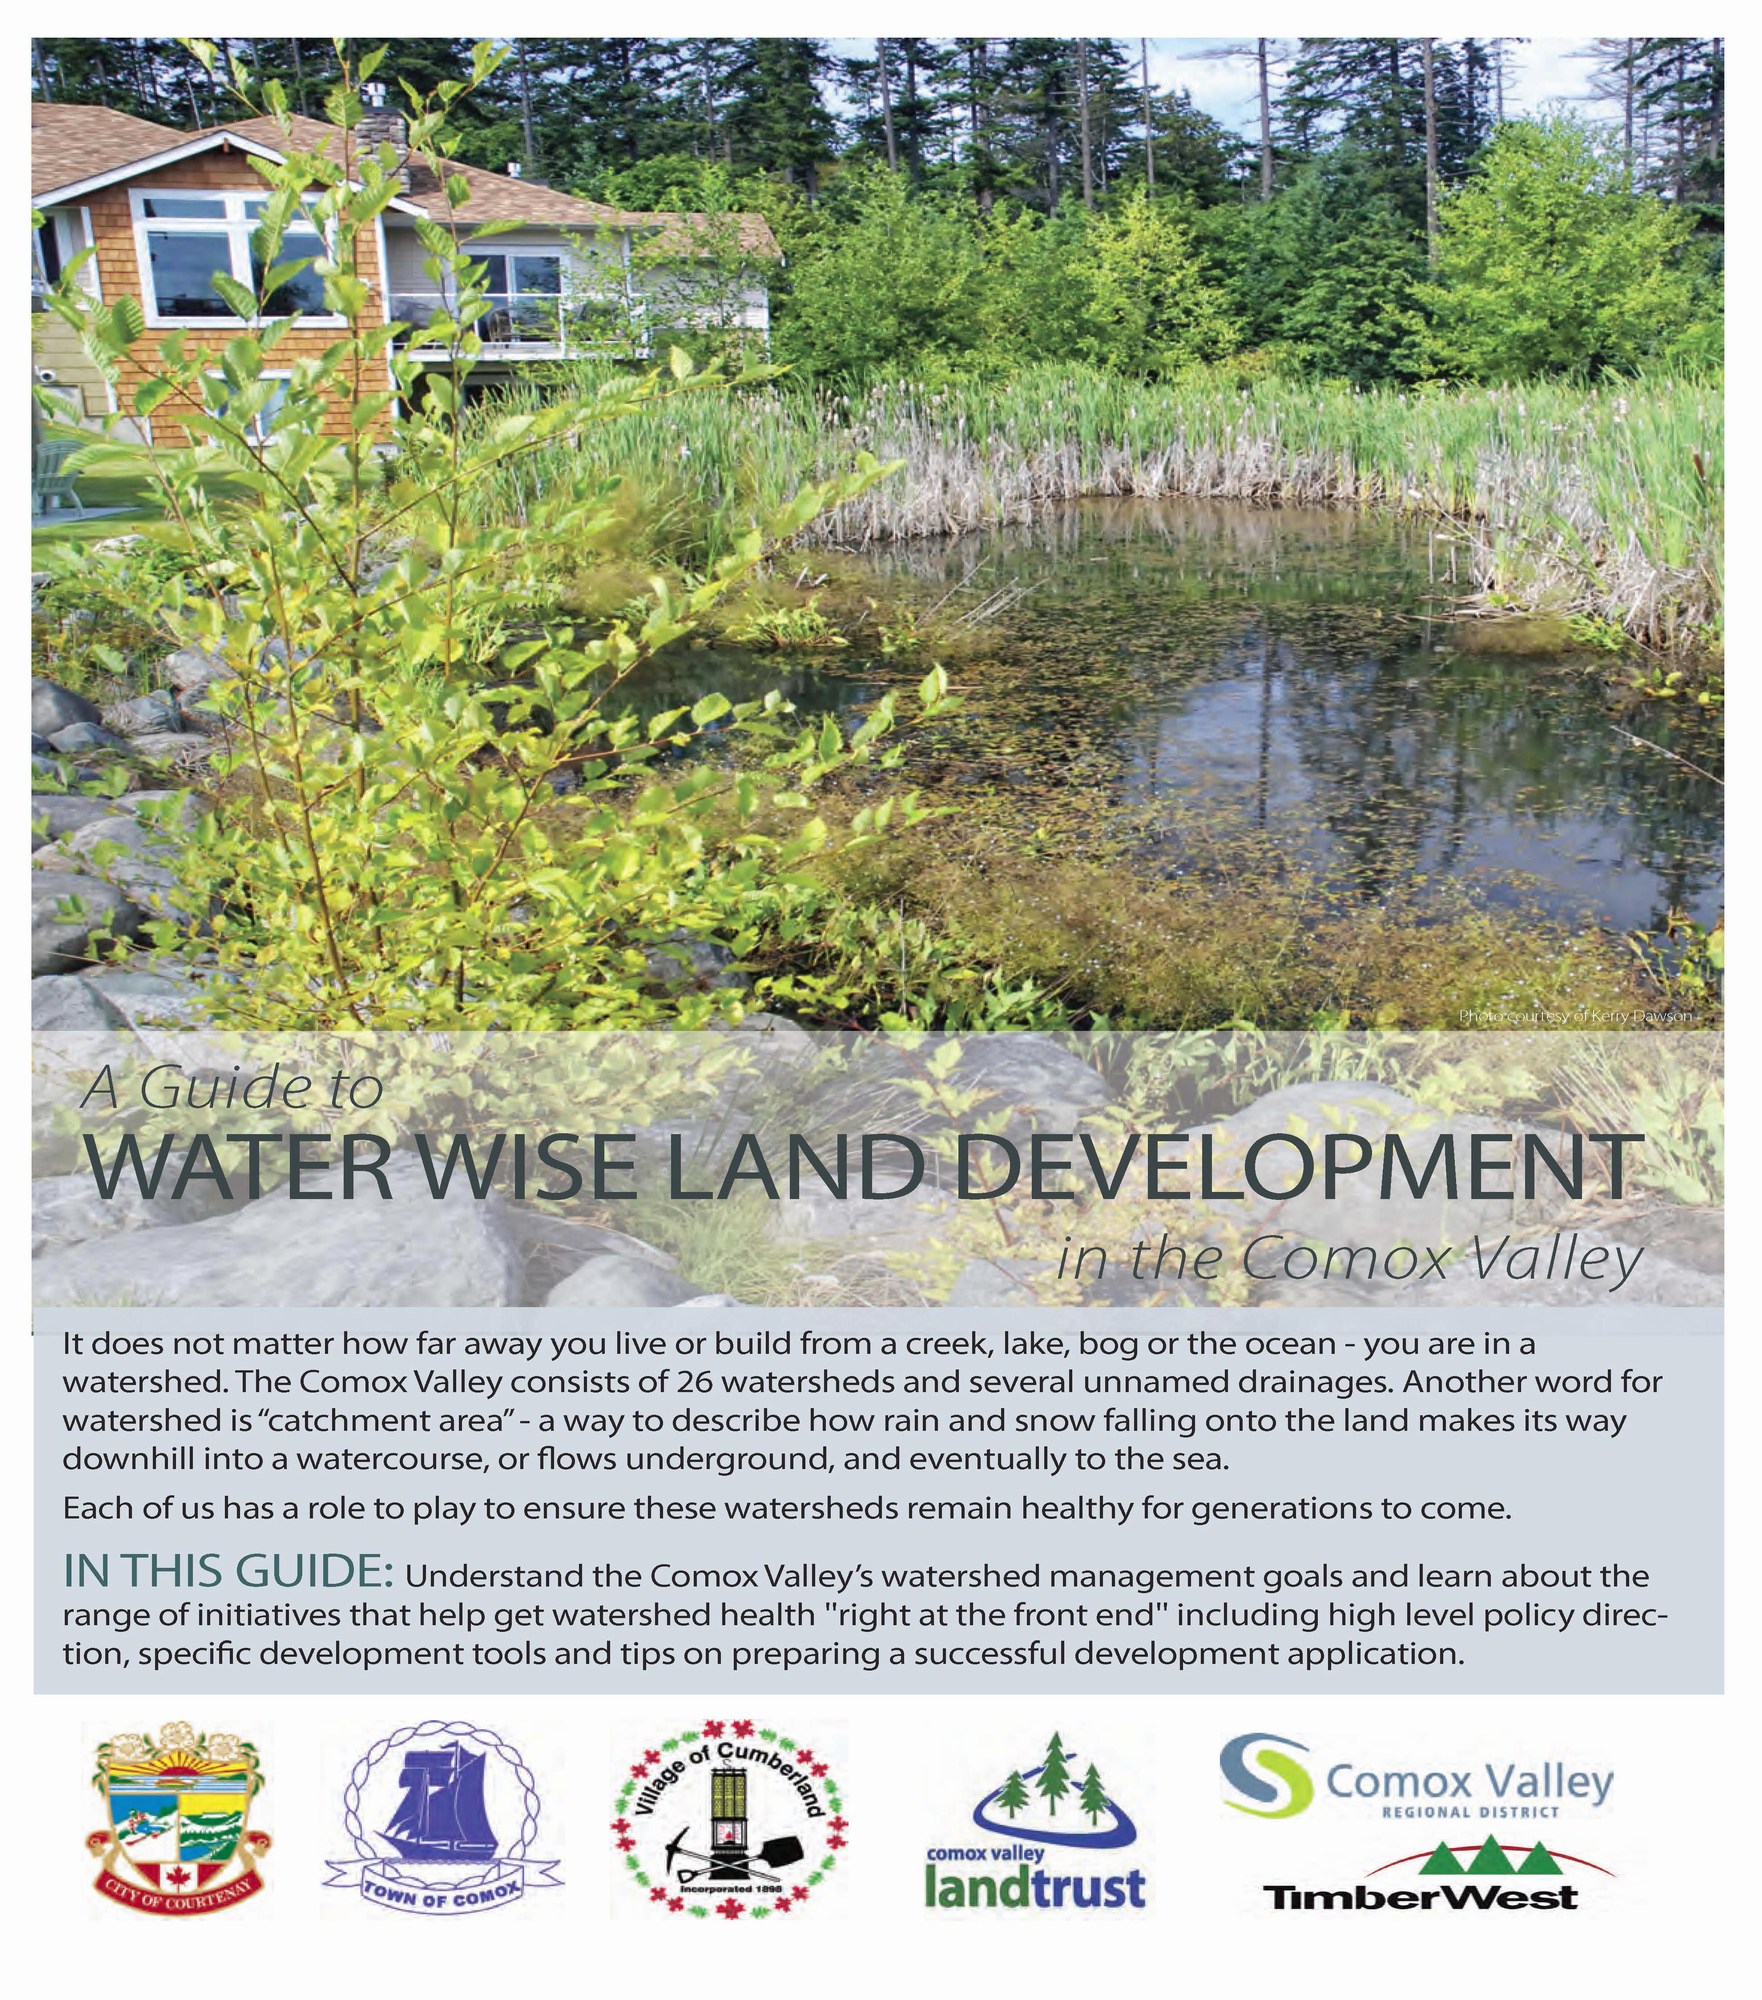 ComoxValley_Water Wise Development_June2014_cover_2000p